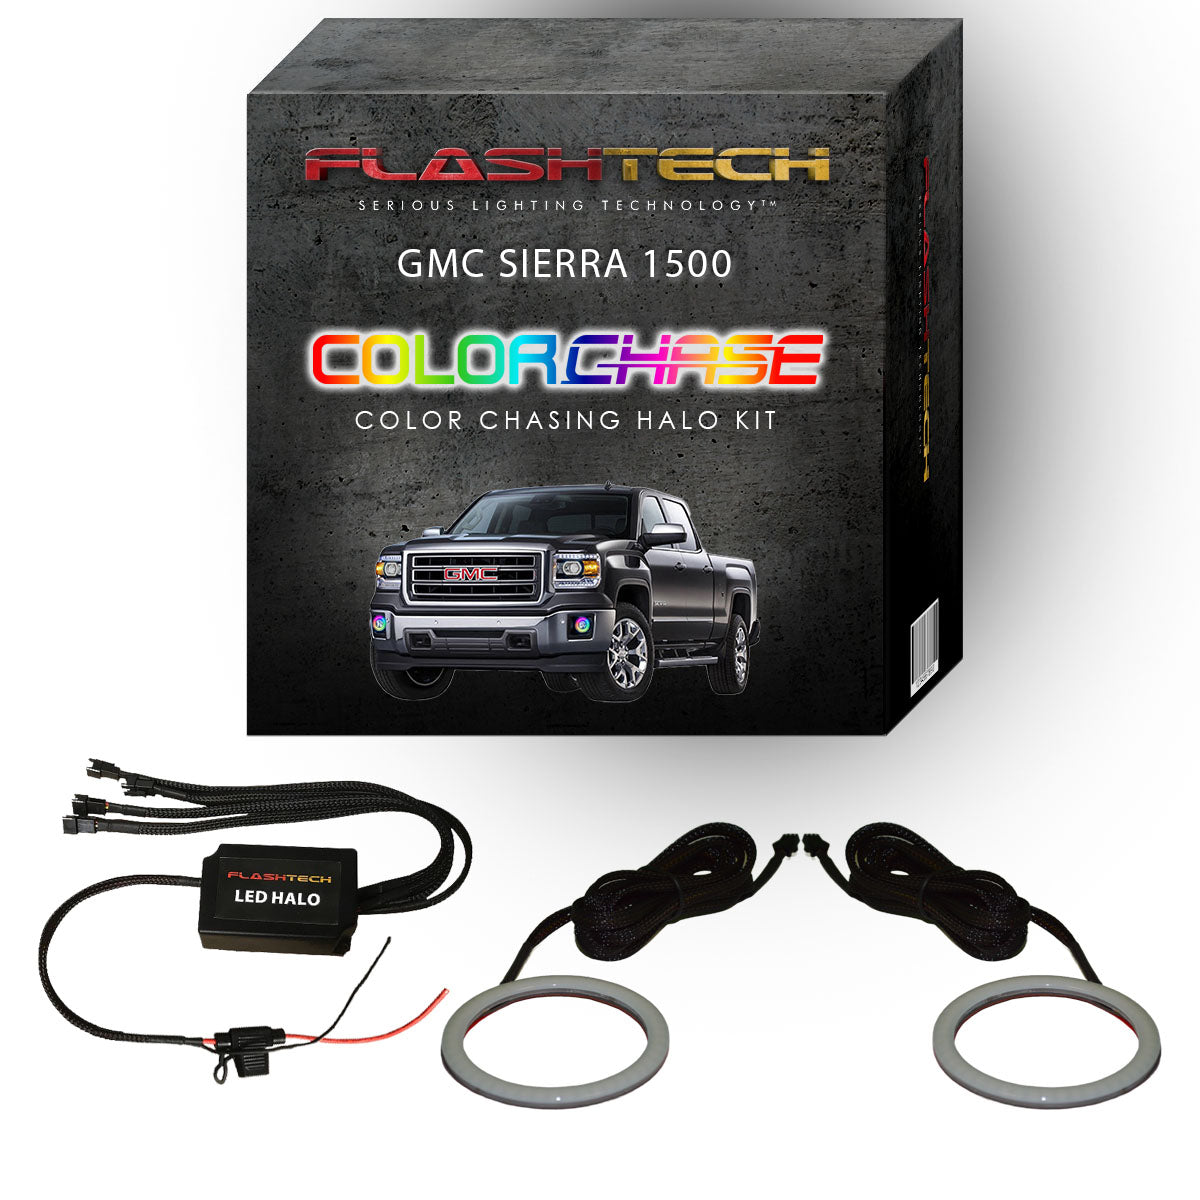 GMC Sierra ColorChase LED Halo Fog Light Kit 2014-2016